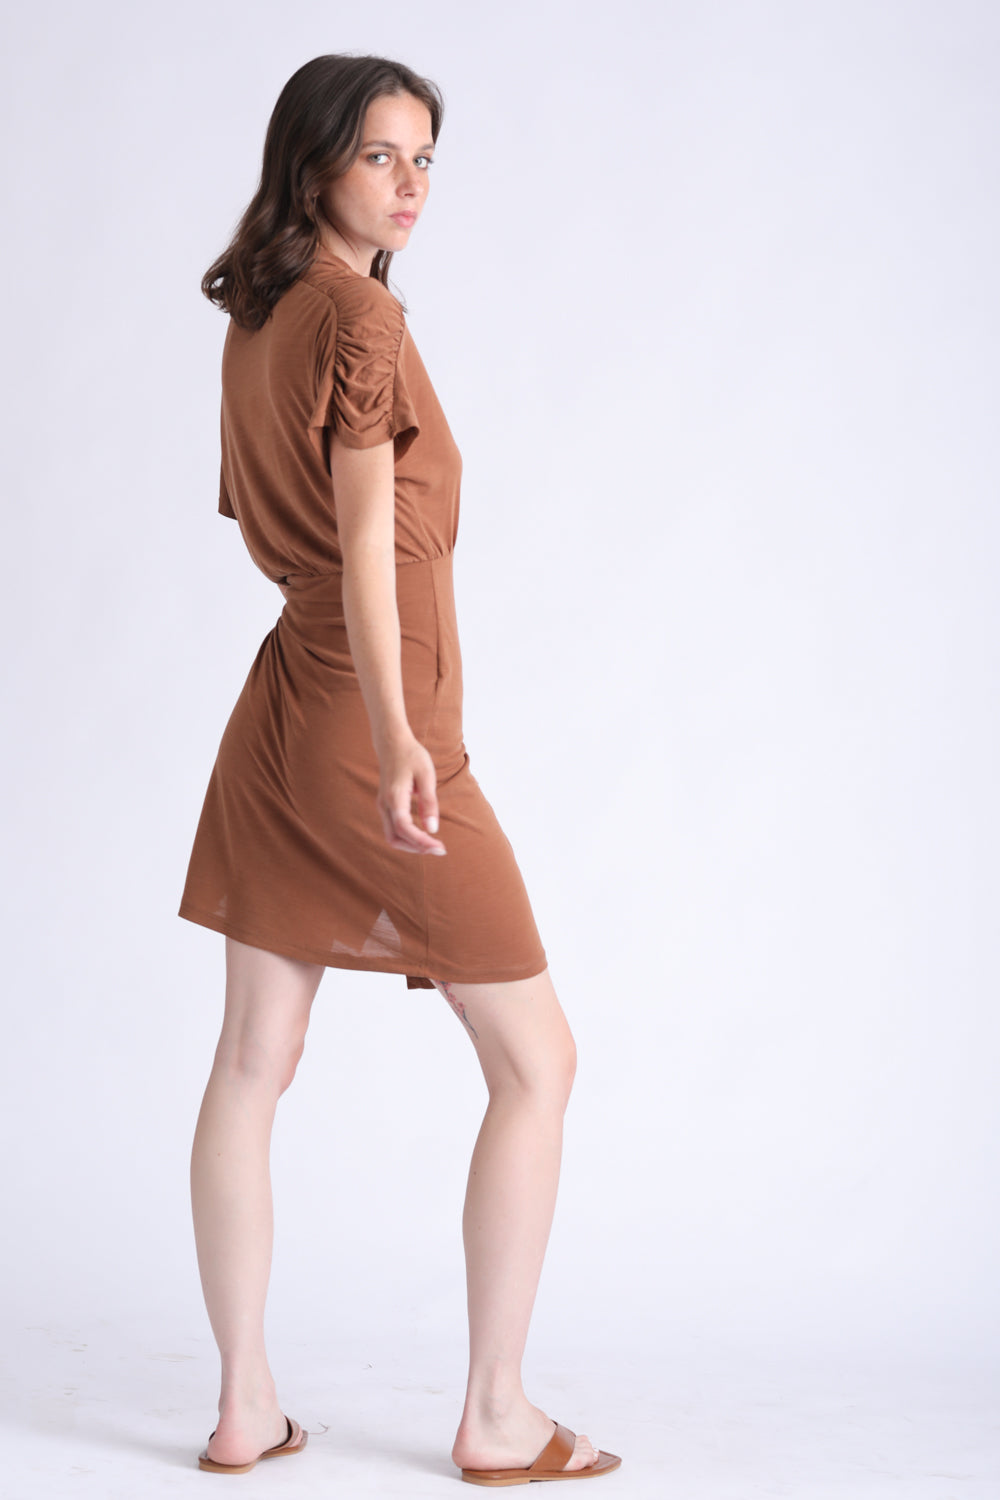 Playful Brown Dress